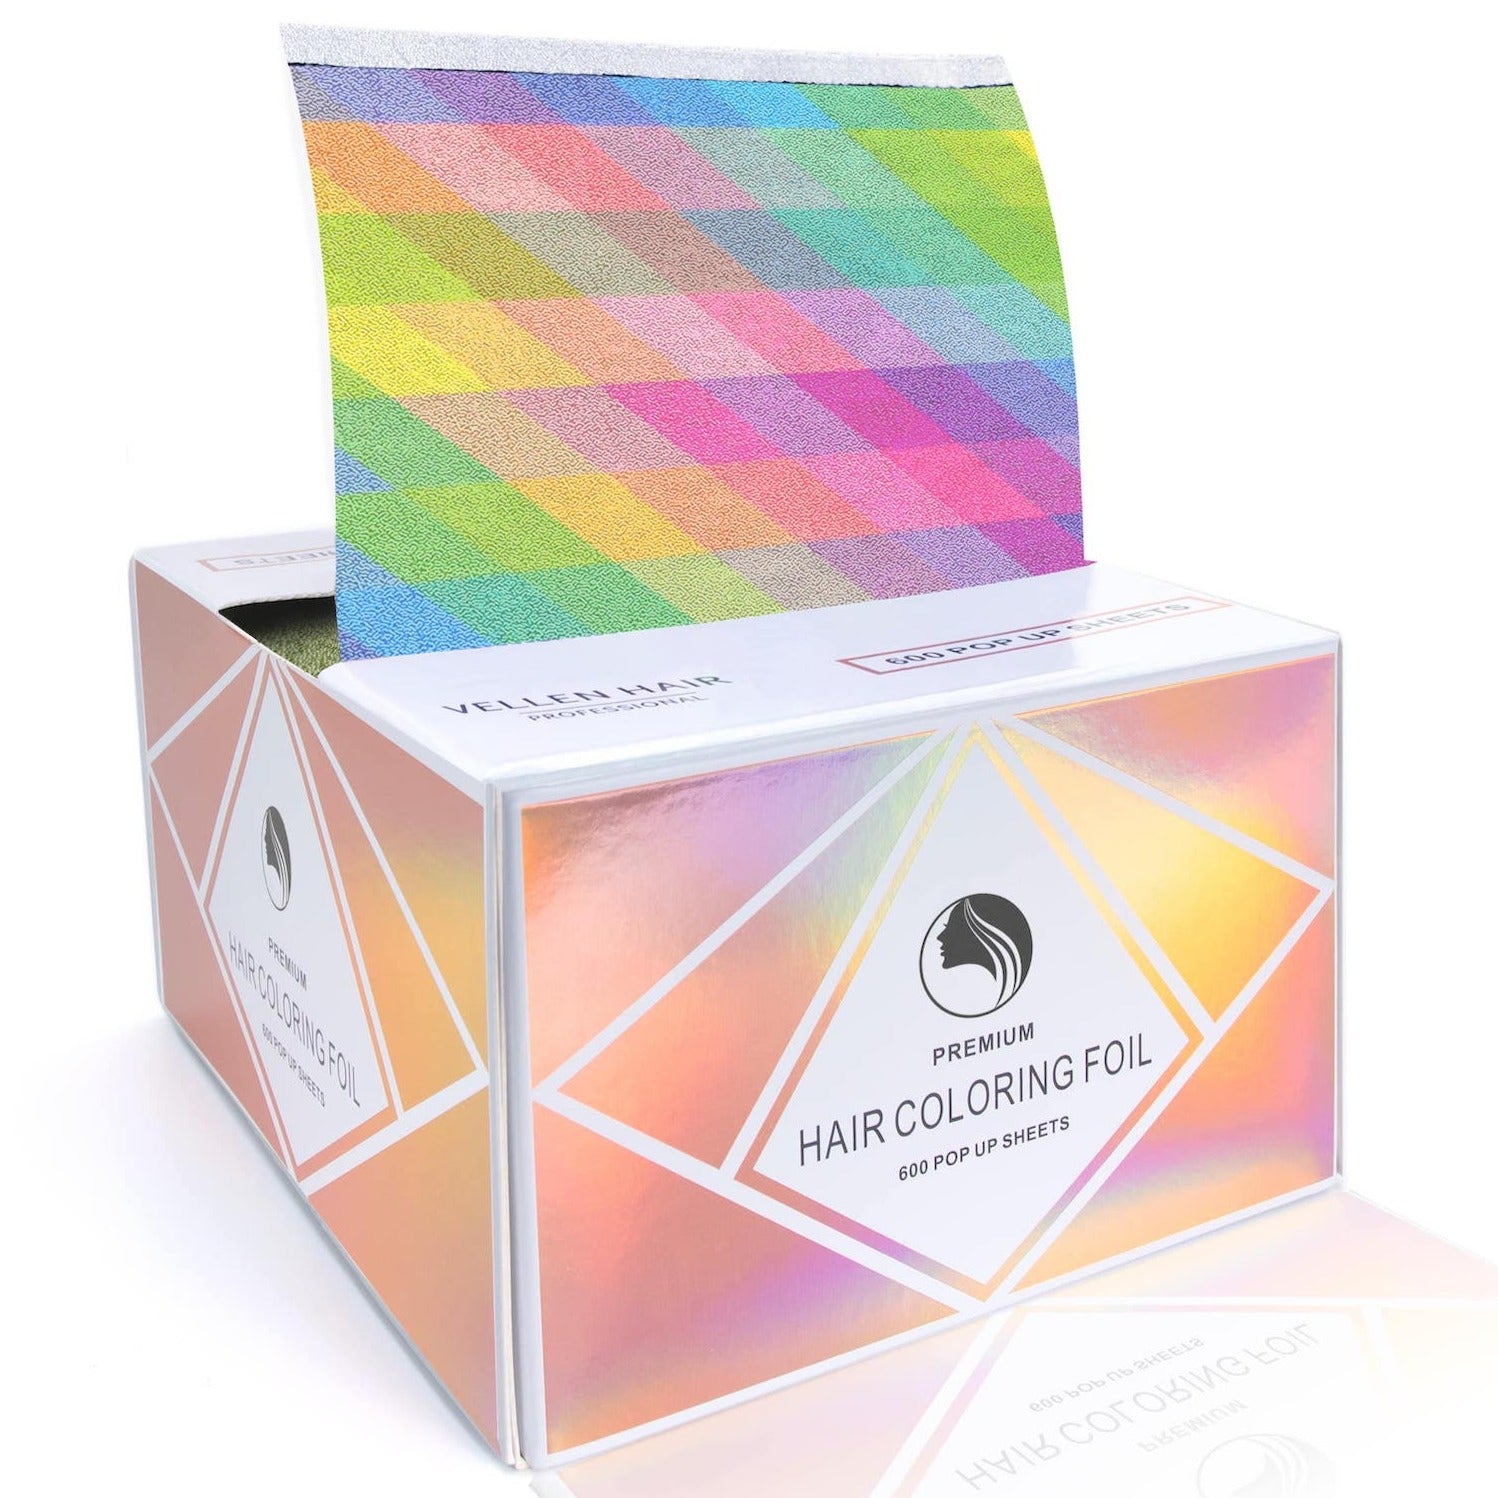 5x11 Pop Up Foil Sheets - 600 Sheets - Rainbow Life